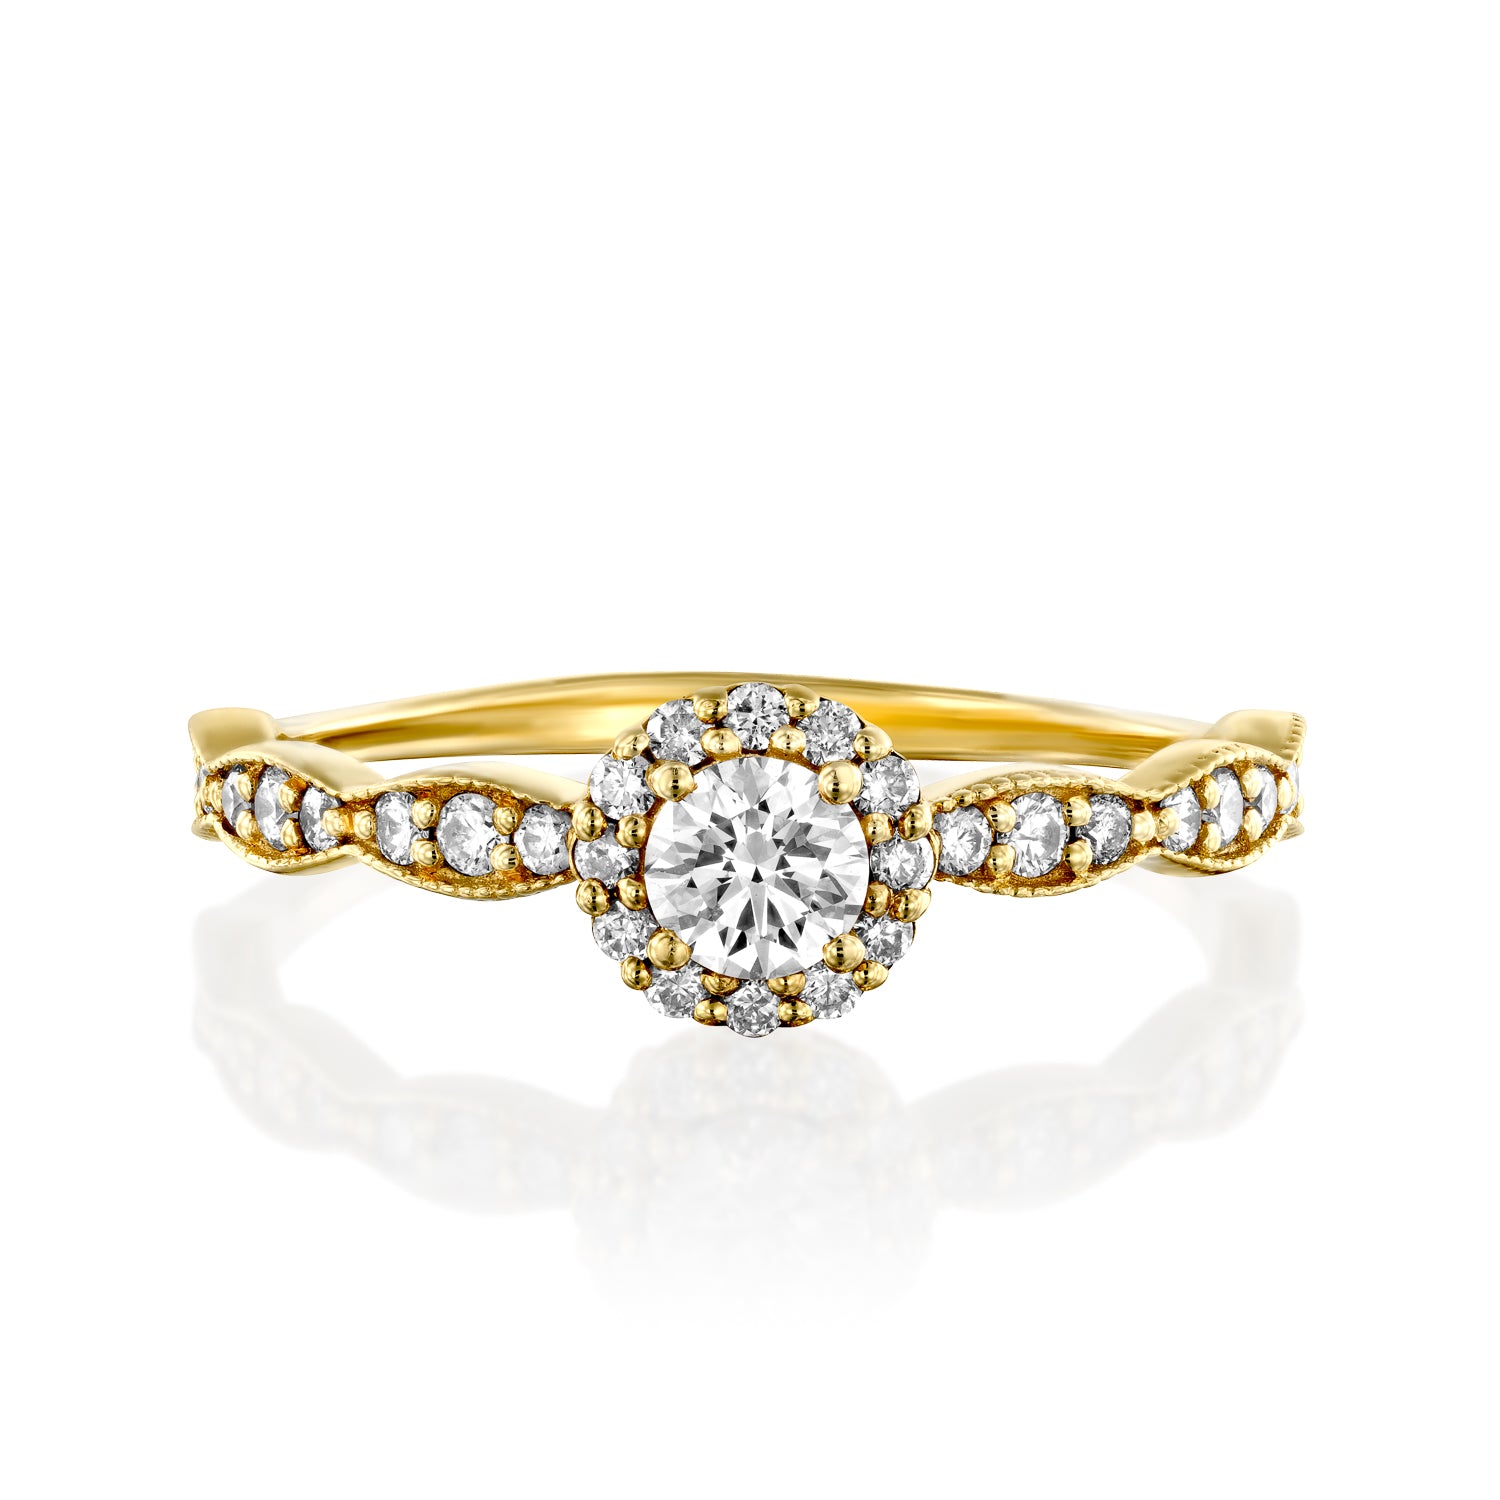 Elizabeth Gold Ring White Diamonds